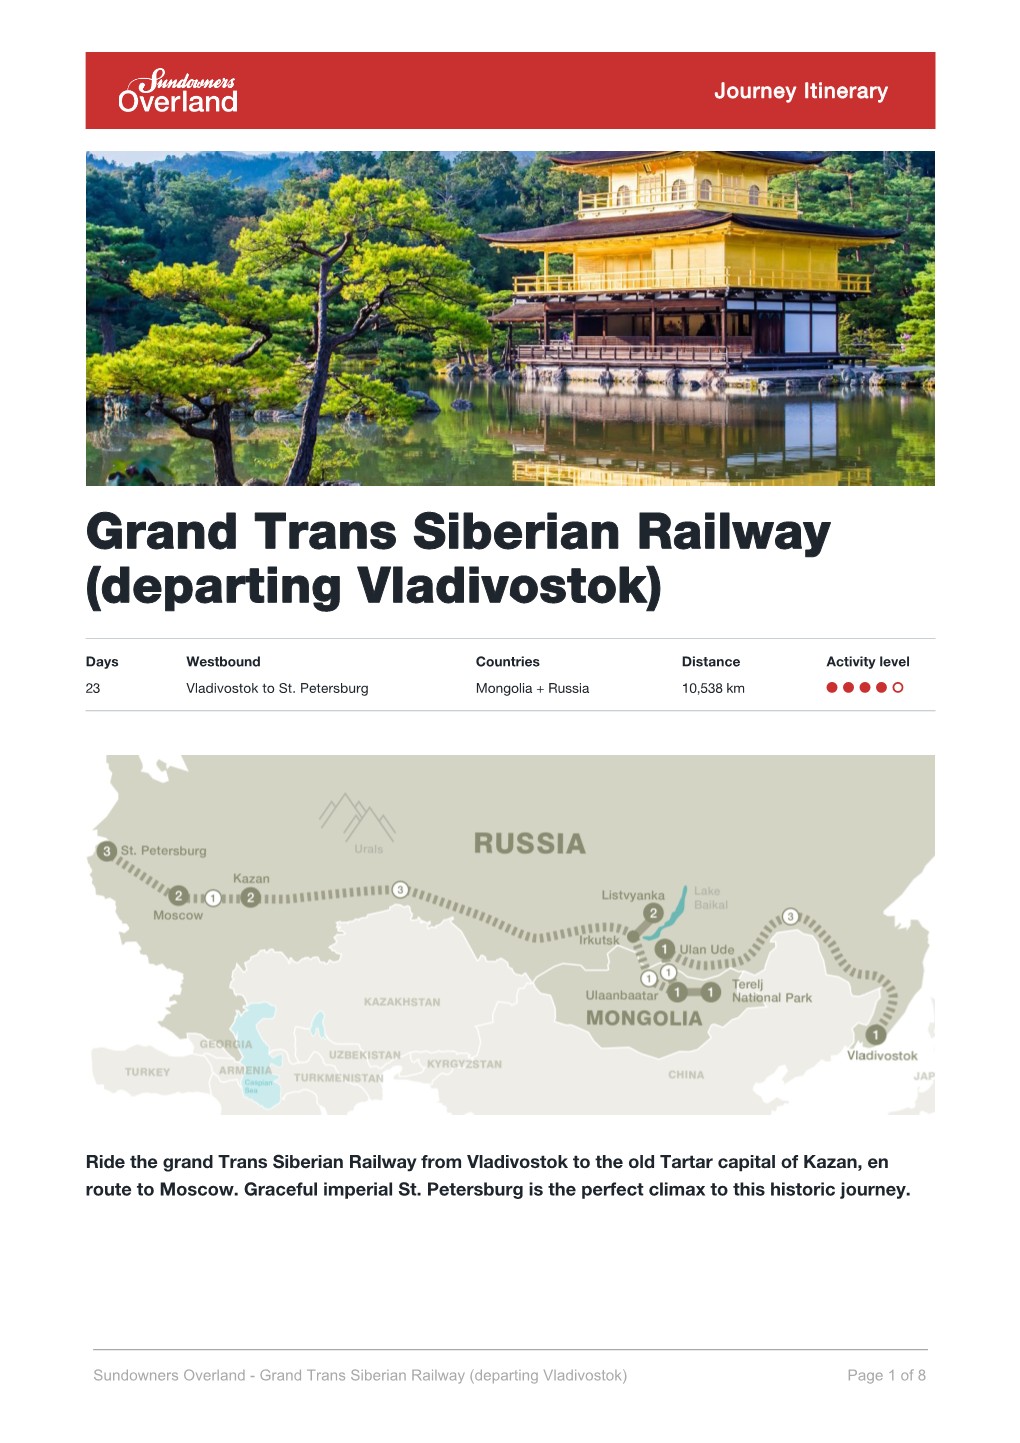 Grand Trans Siberian Railway (Departing Vladivostok)